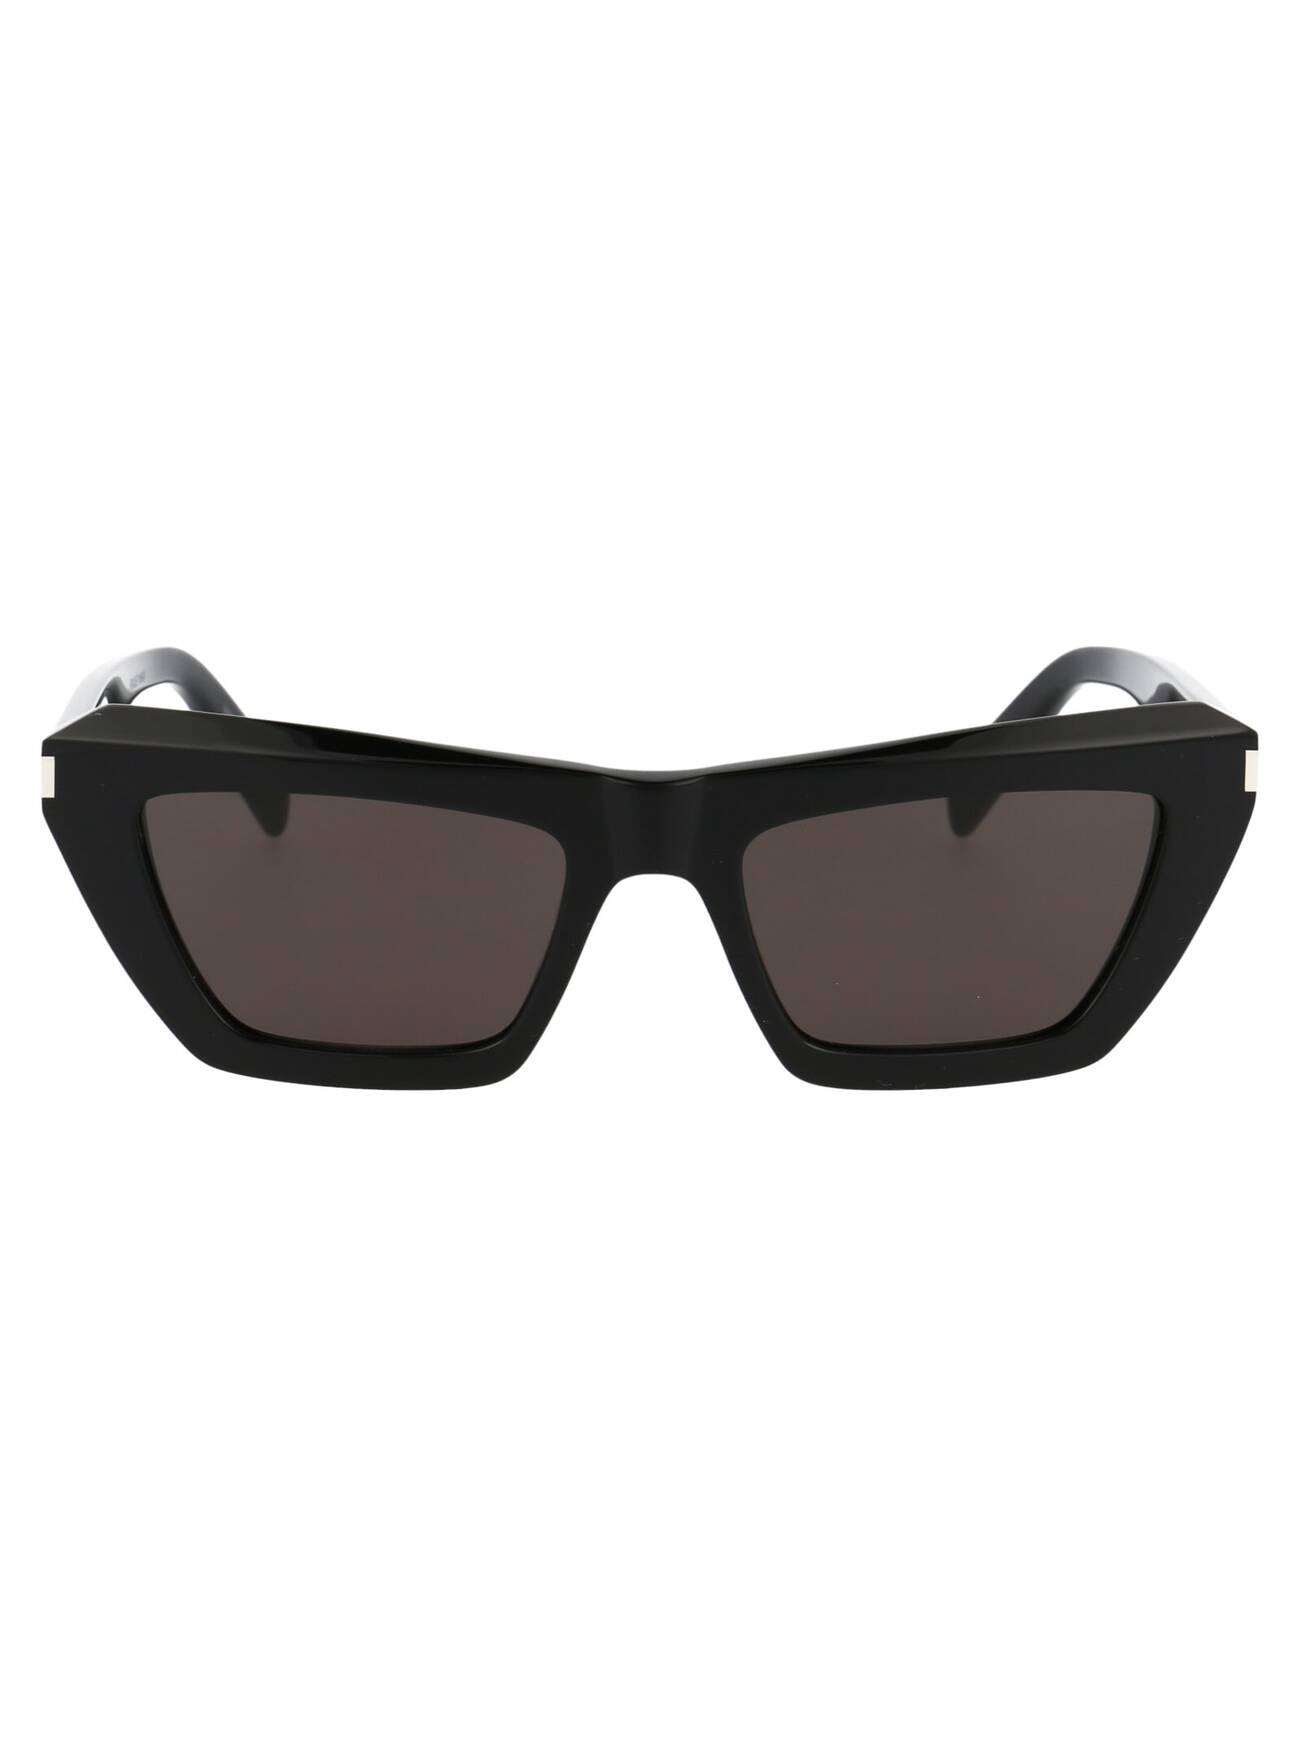 Saint Laurent Eyewear Sl 467 Sunglasses in black